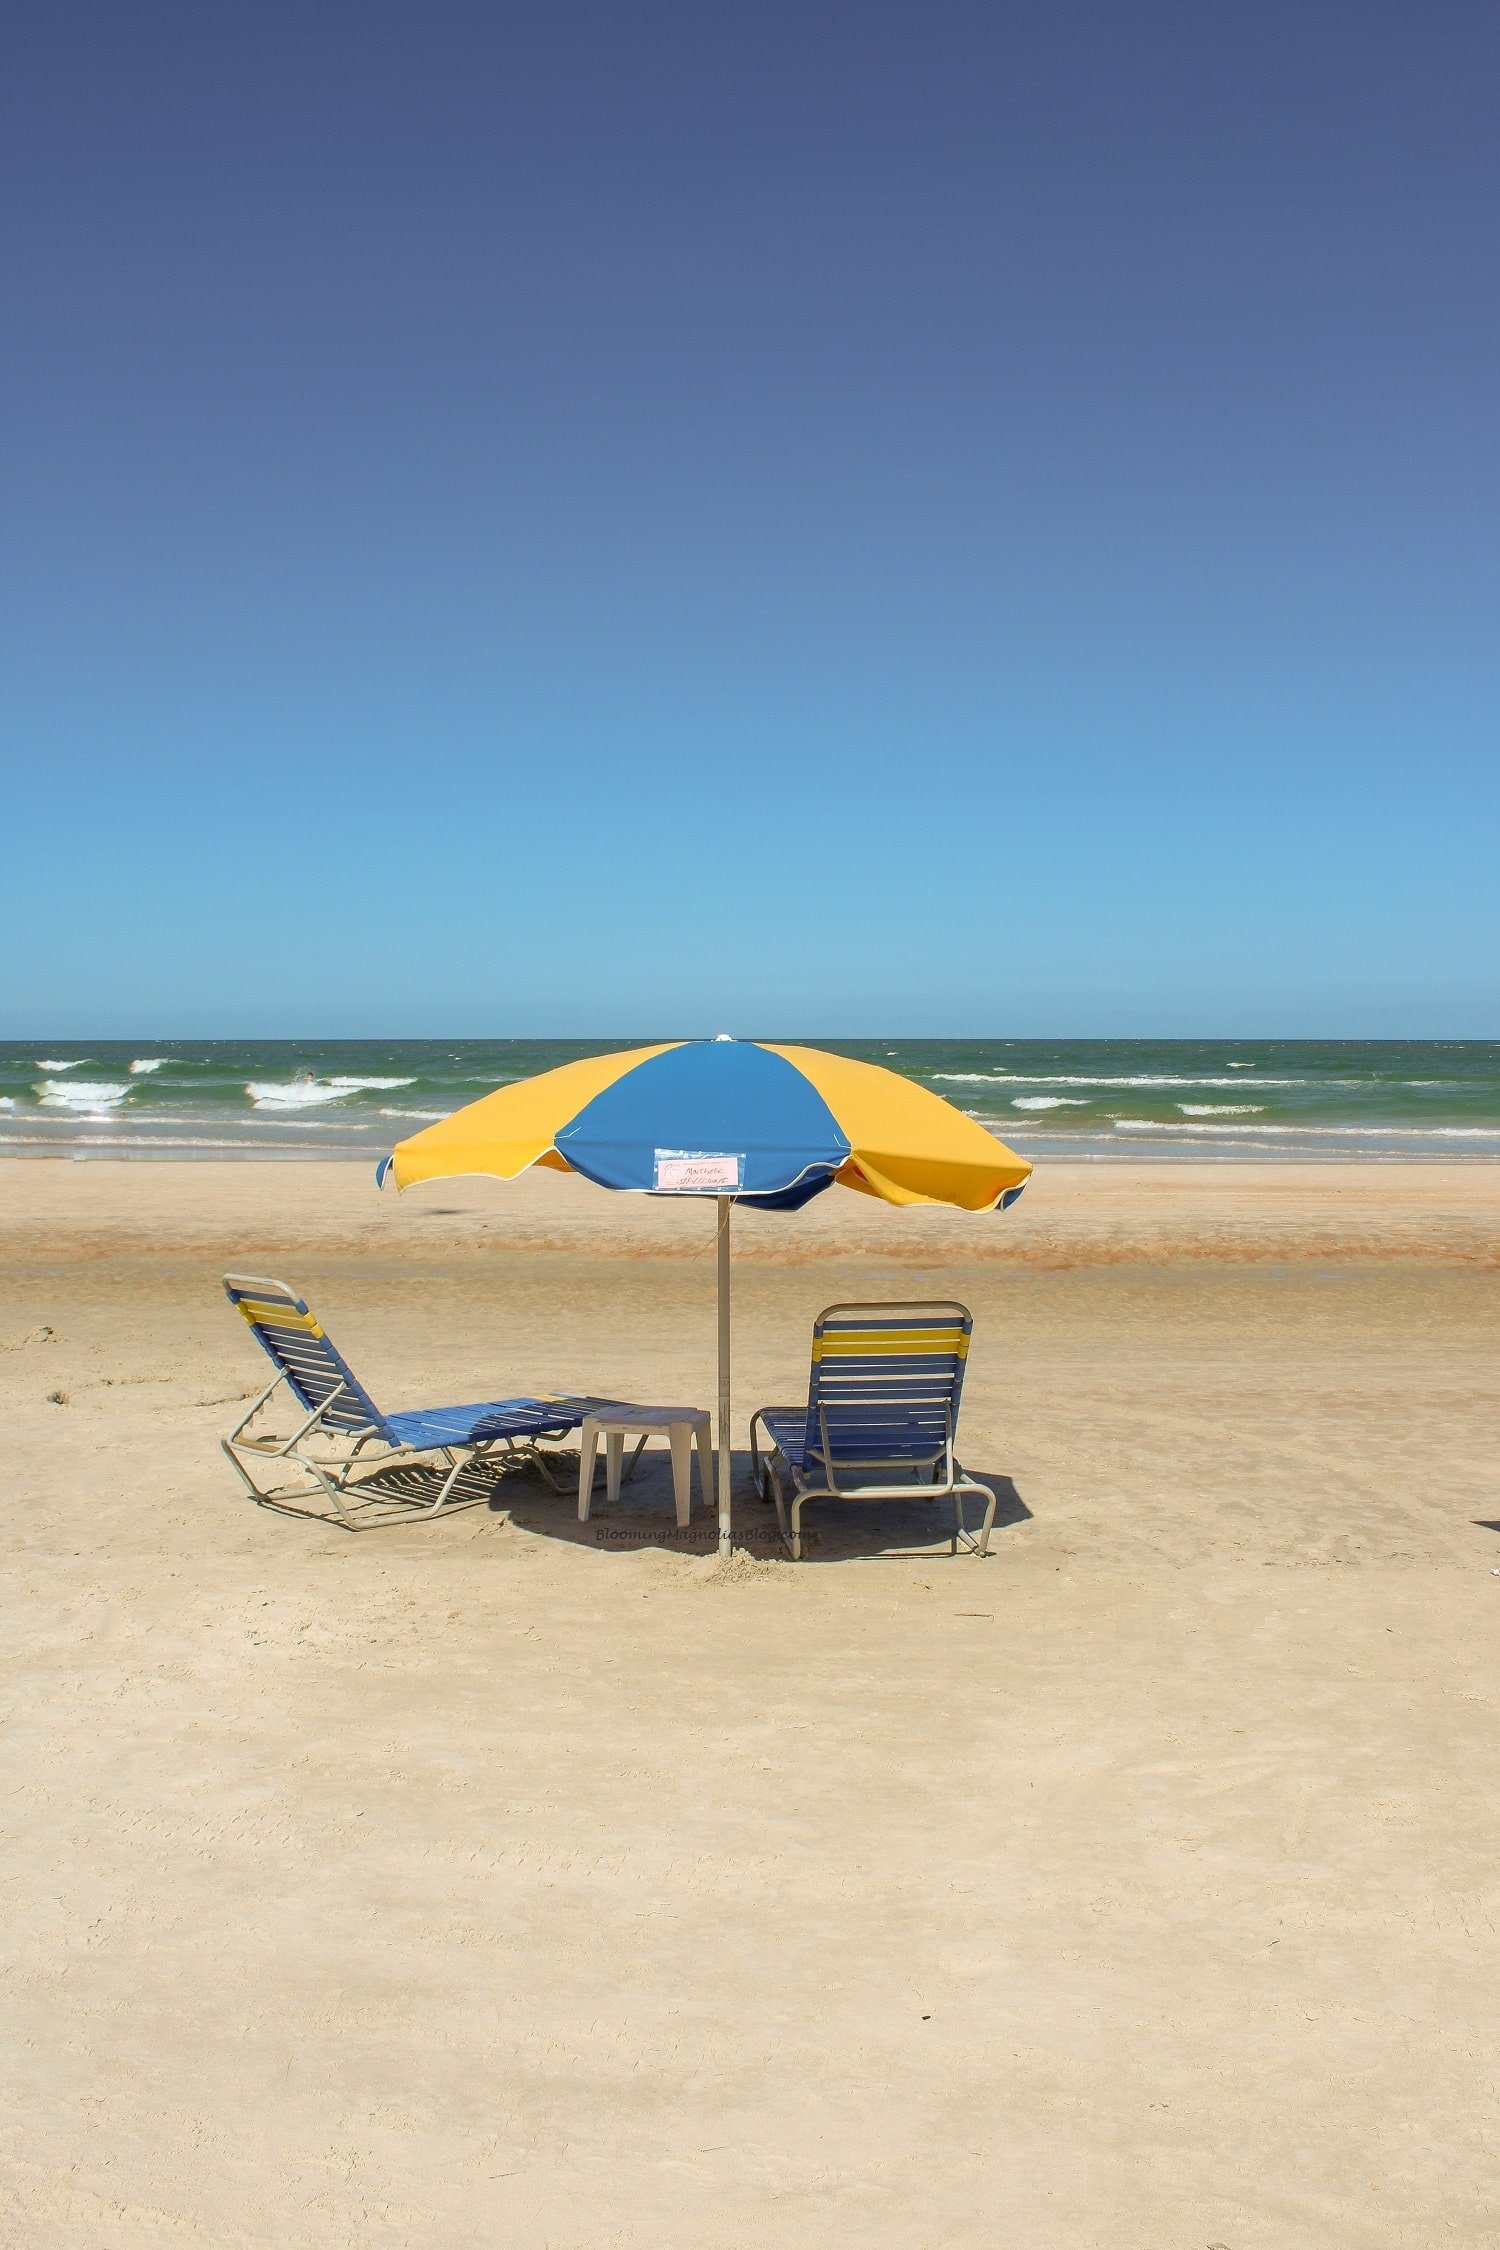 Postcards from Daytona Beach... | Blooming Magnolias Blog | Travel, beach day, Daytona Beach pier